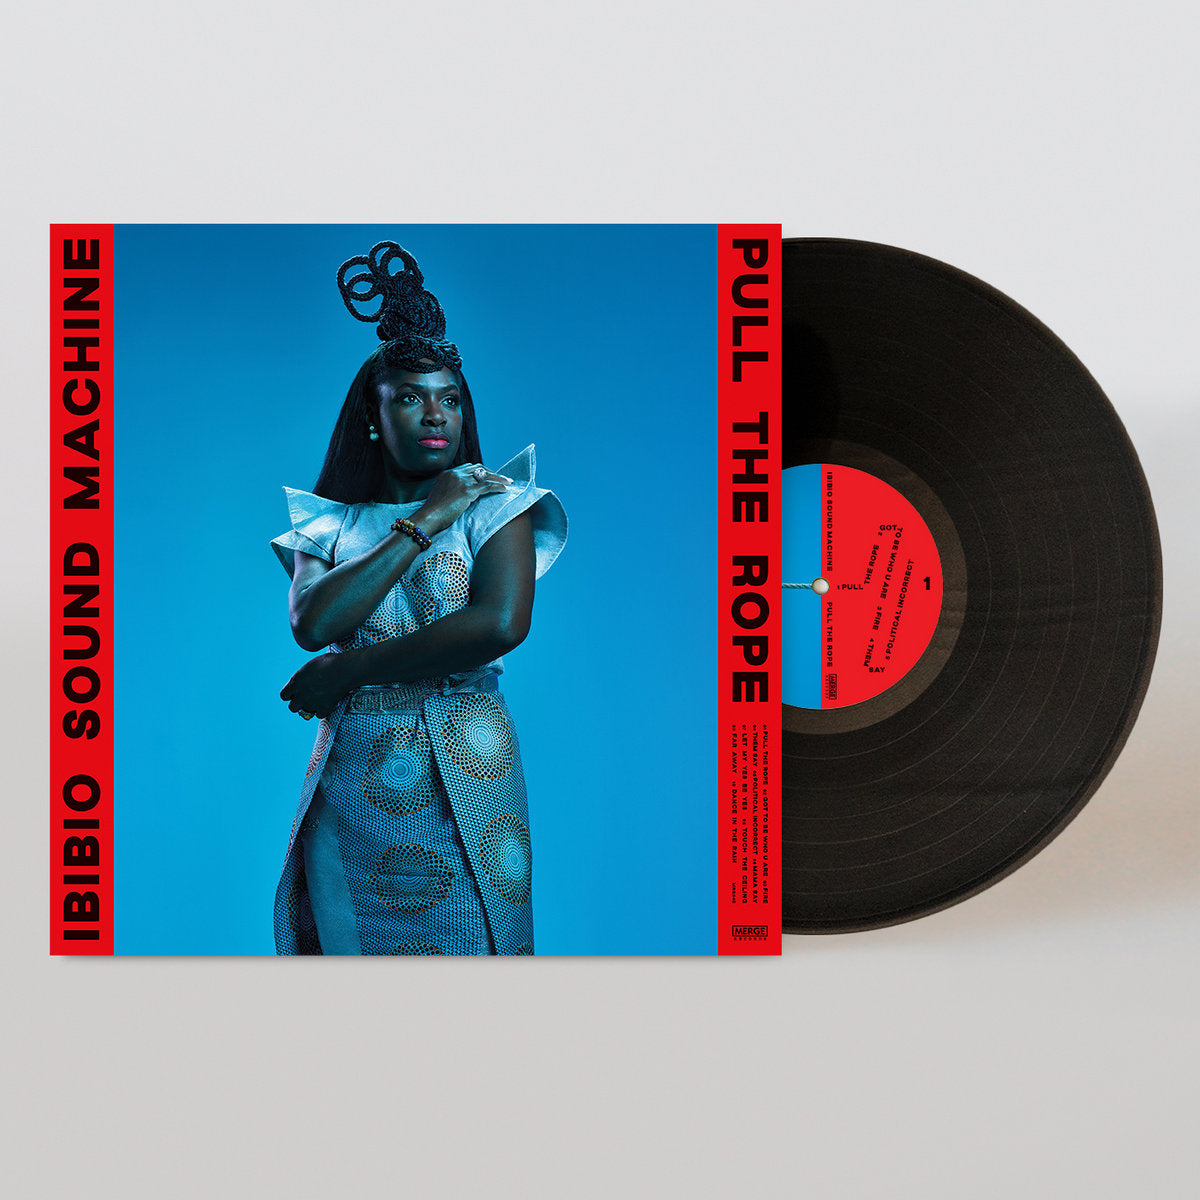 Ibibio Sound Machine - Pull The Rope: Vinyl LP